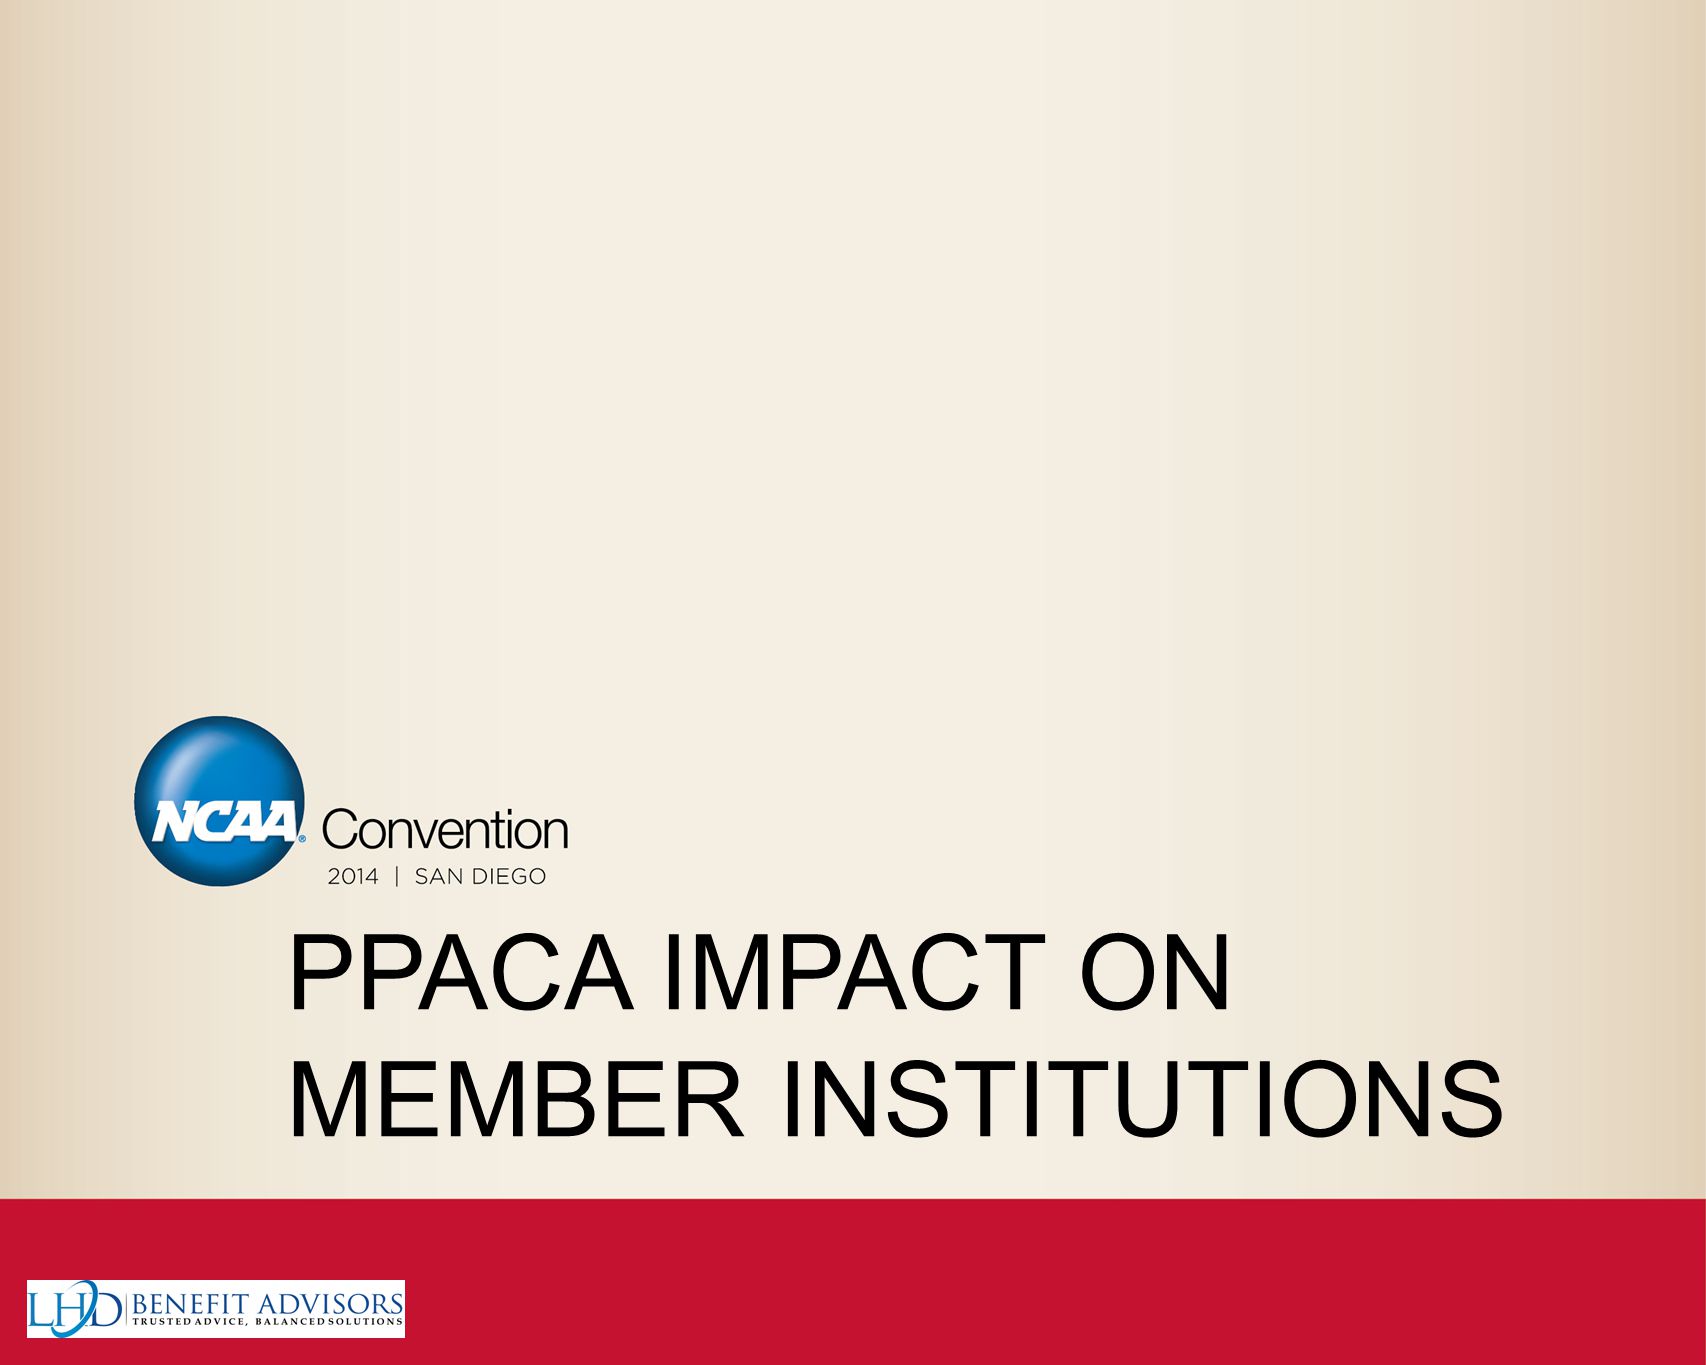 PPACA IMPACT ON MEMBER INSTITUTIONS